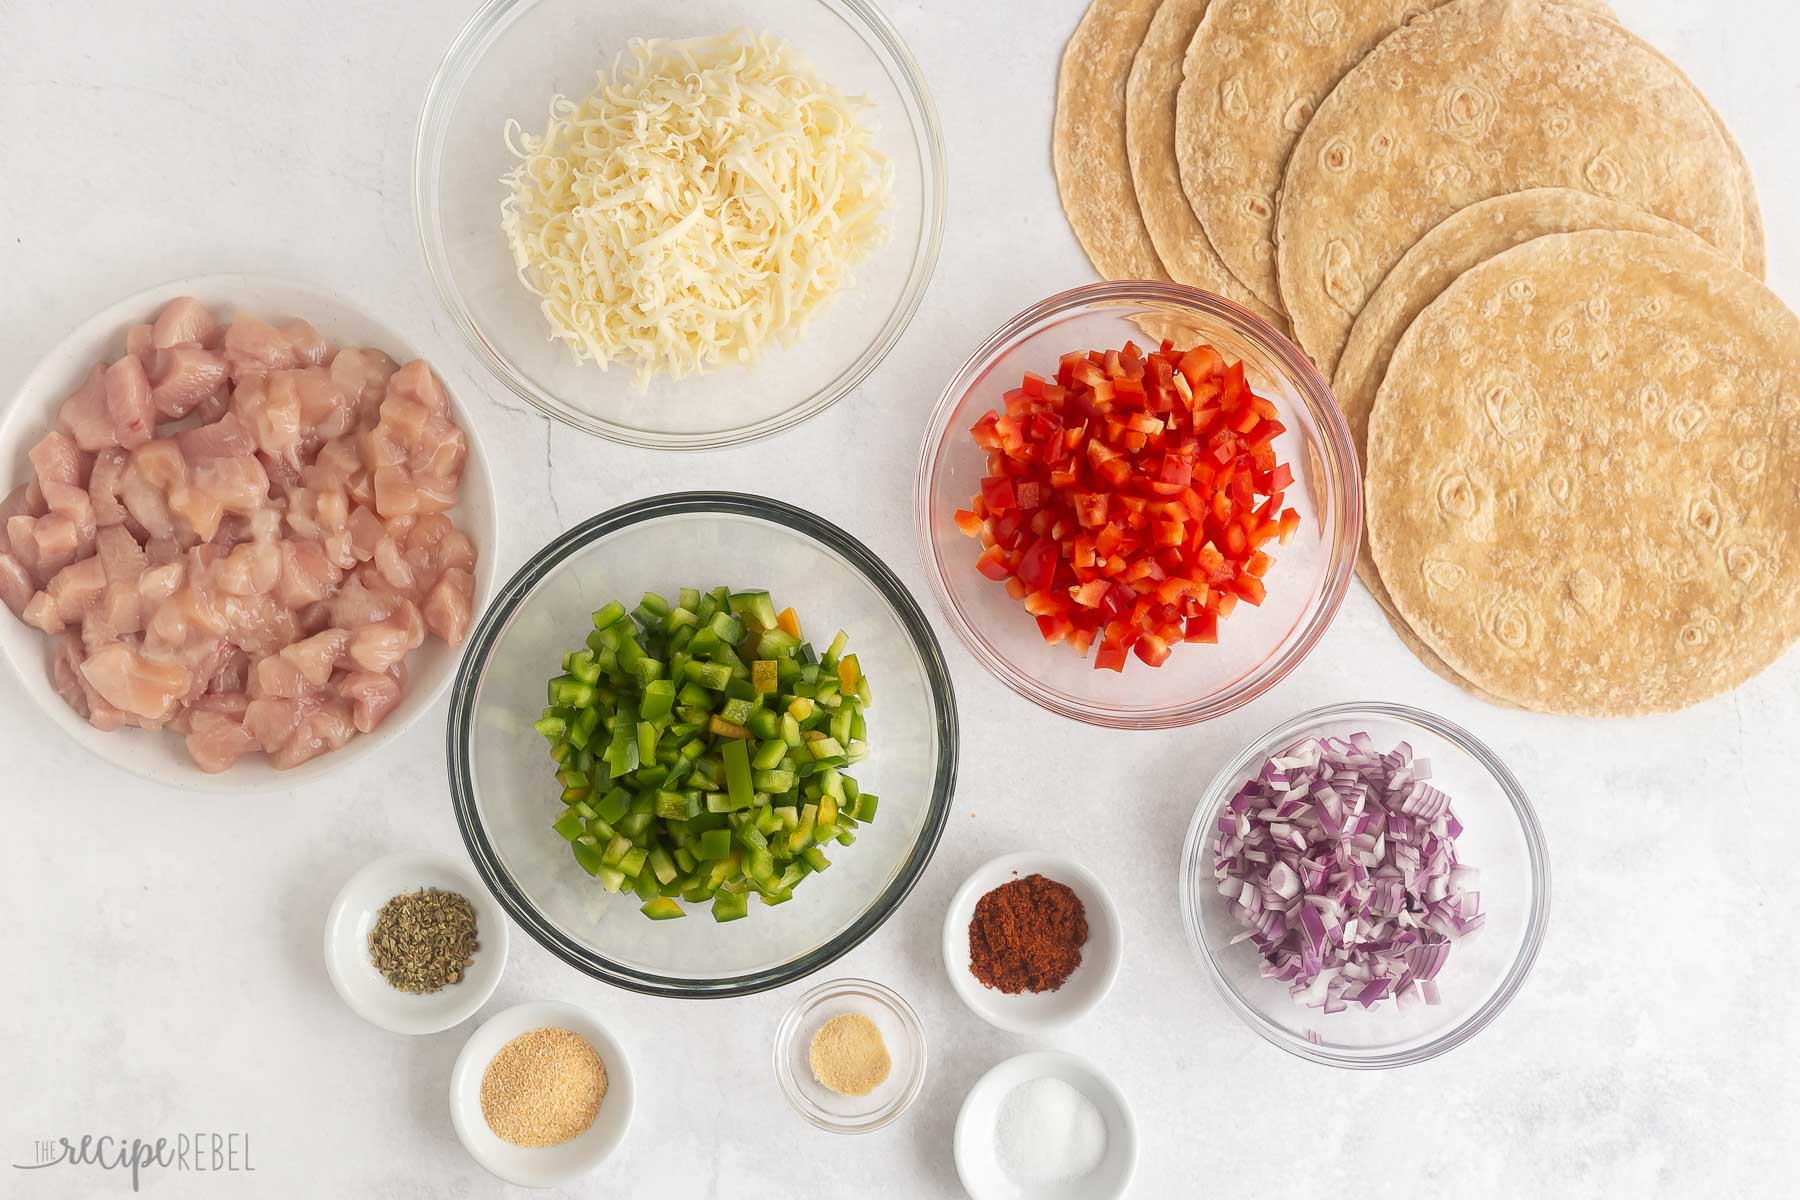 ingredients needed for chicken quesadillas.